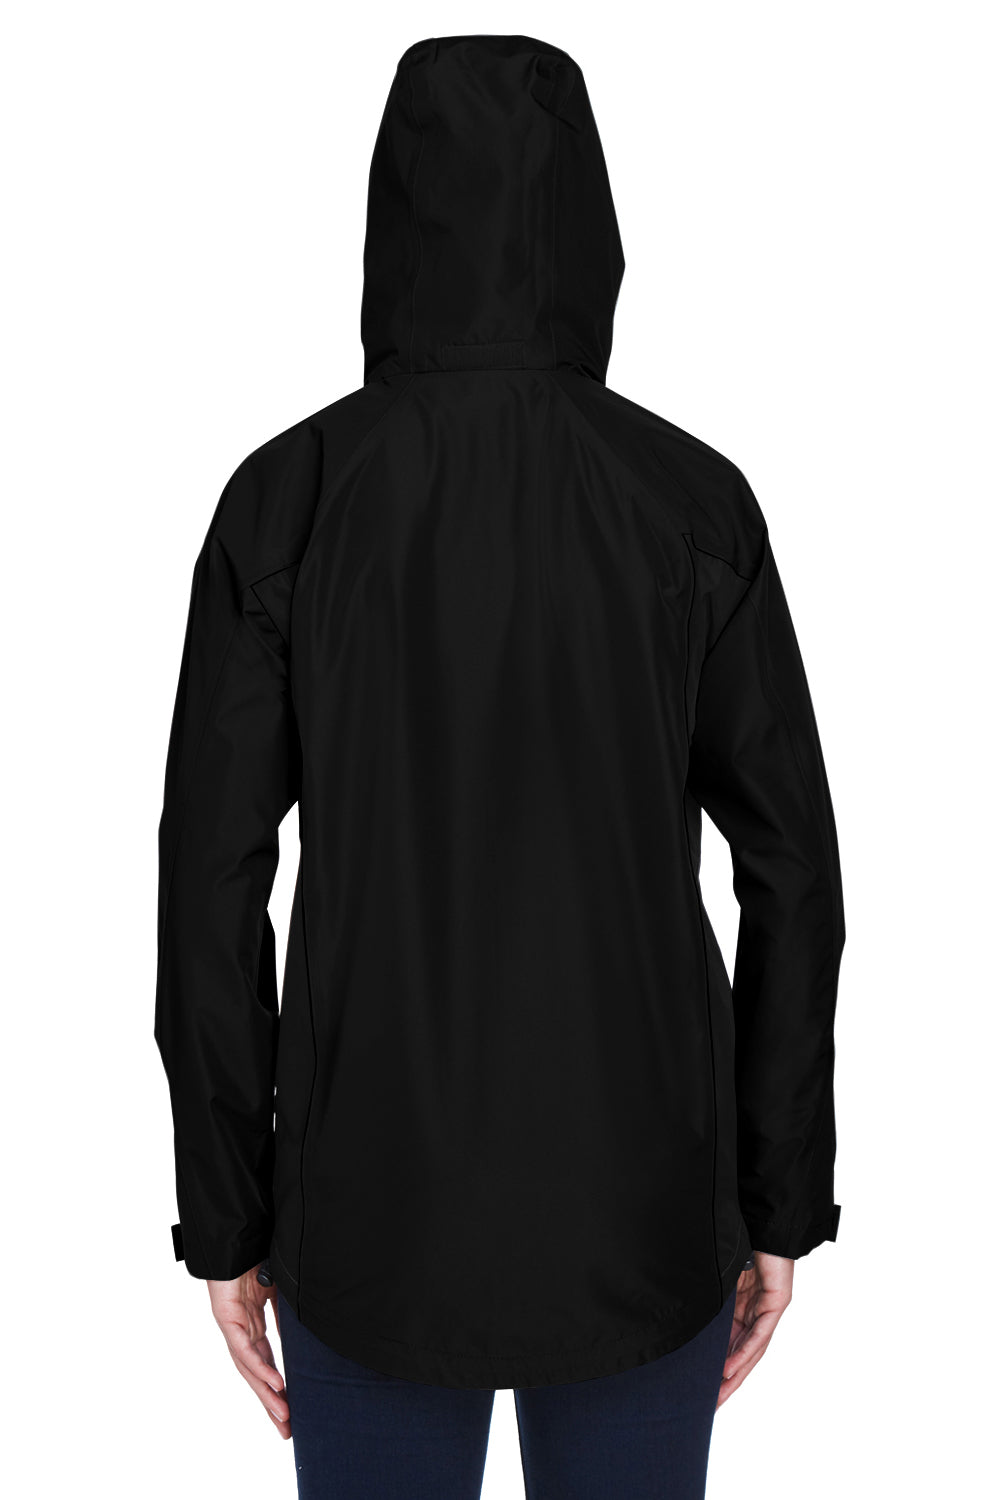 Team 365 TT86W Womens Dominator Waterproof Full Zip Hooded Jacket Black Back